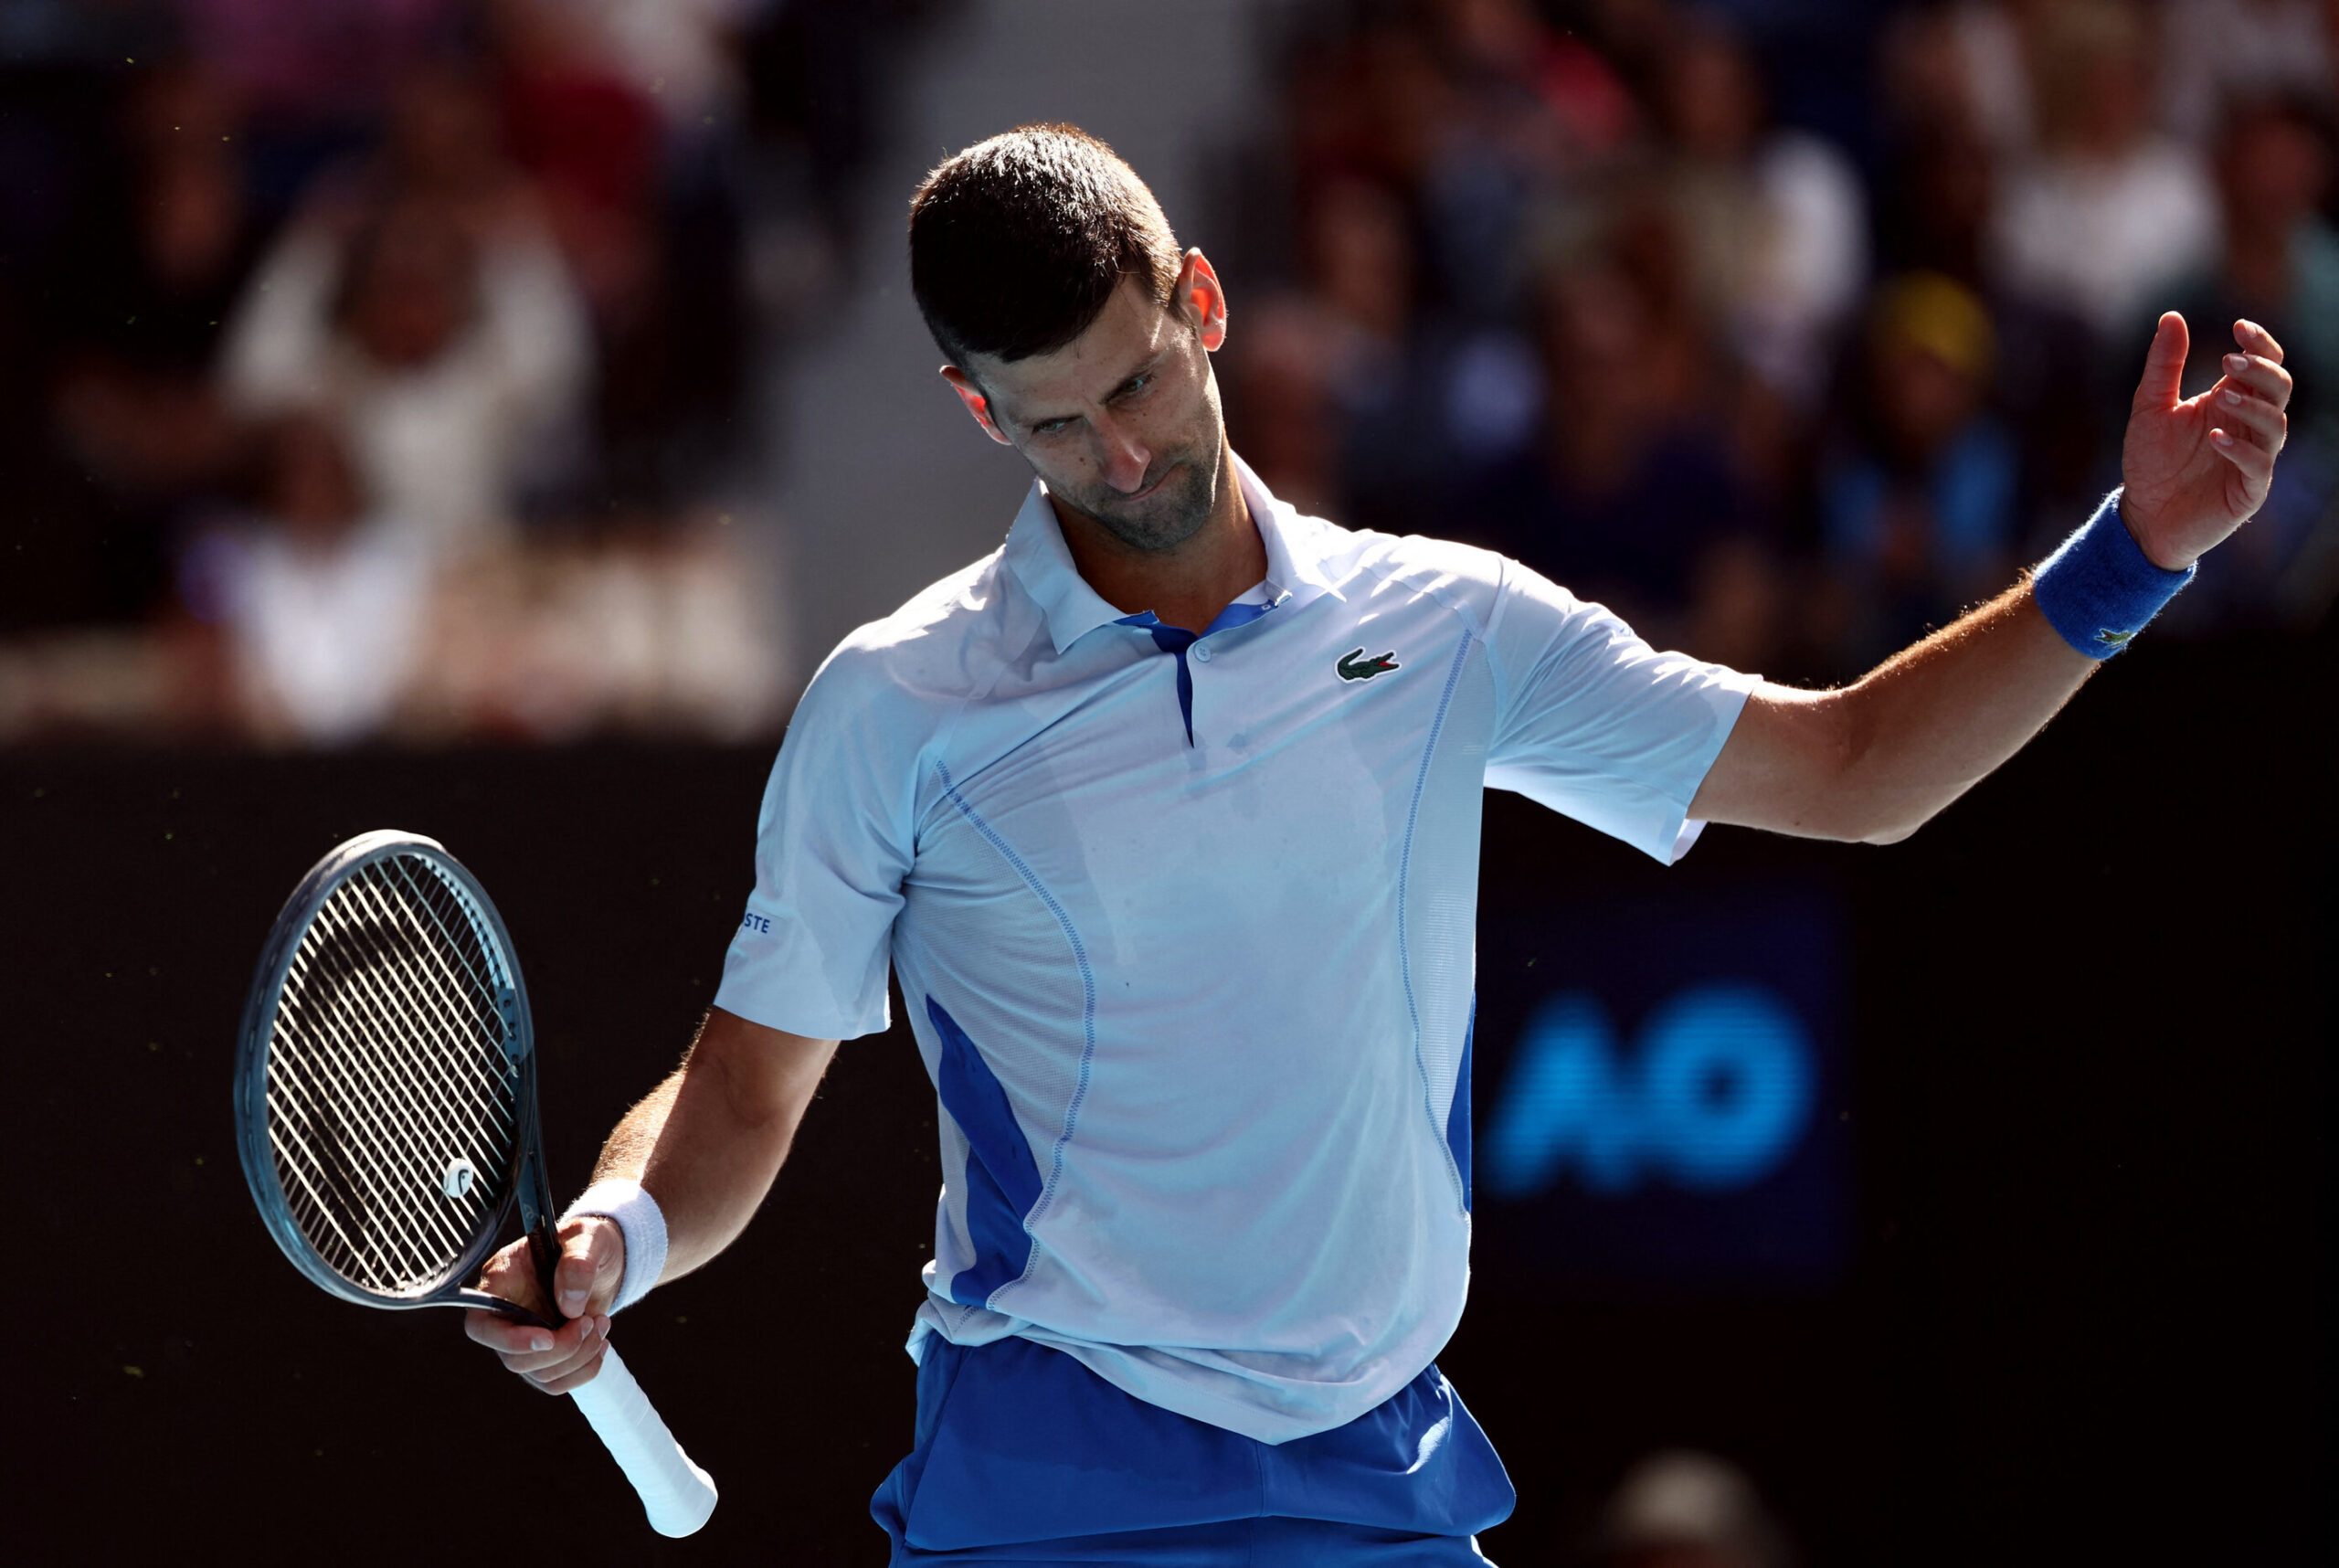 ‘One of my worst’: Djokovic shocked by display in Sinner loss